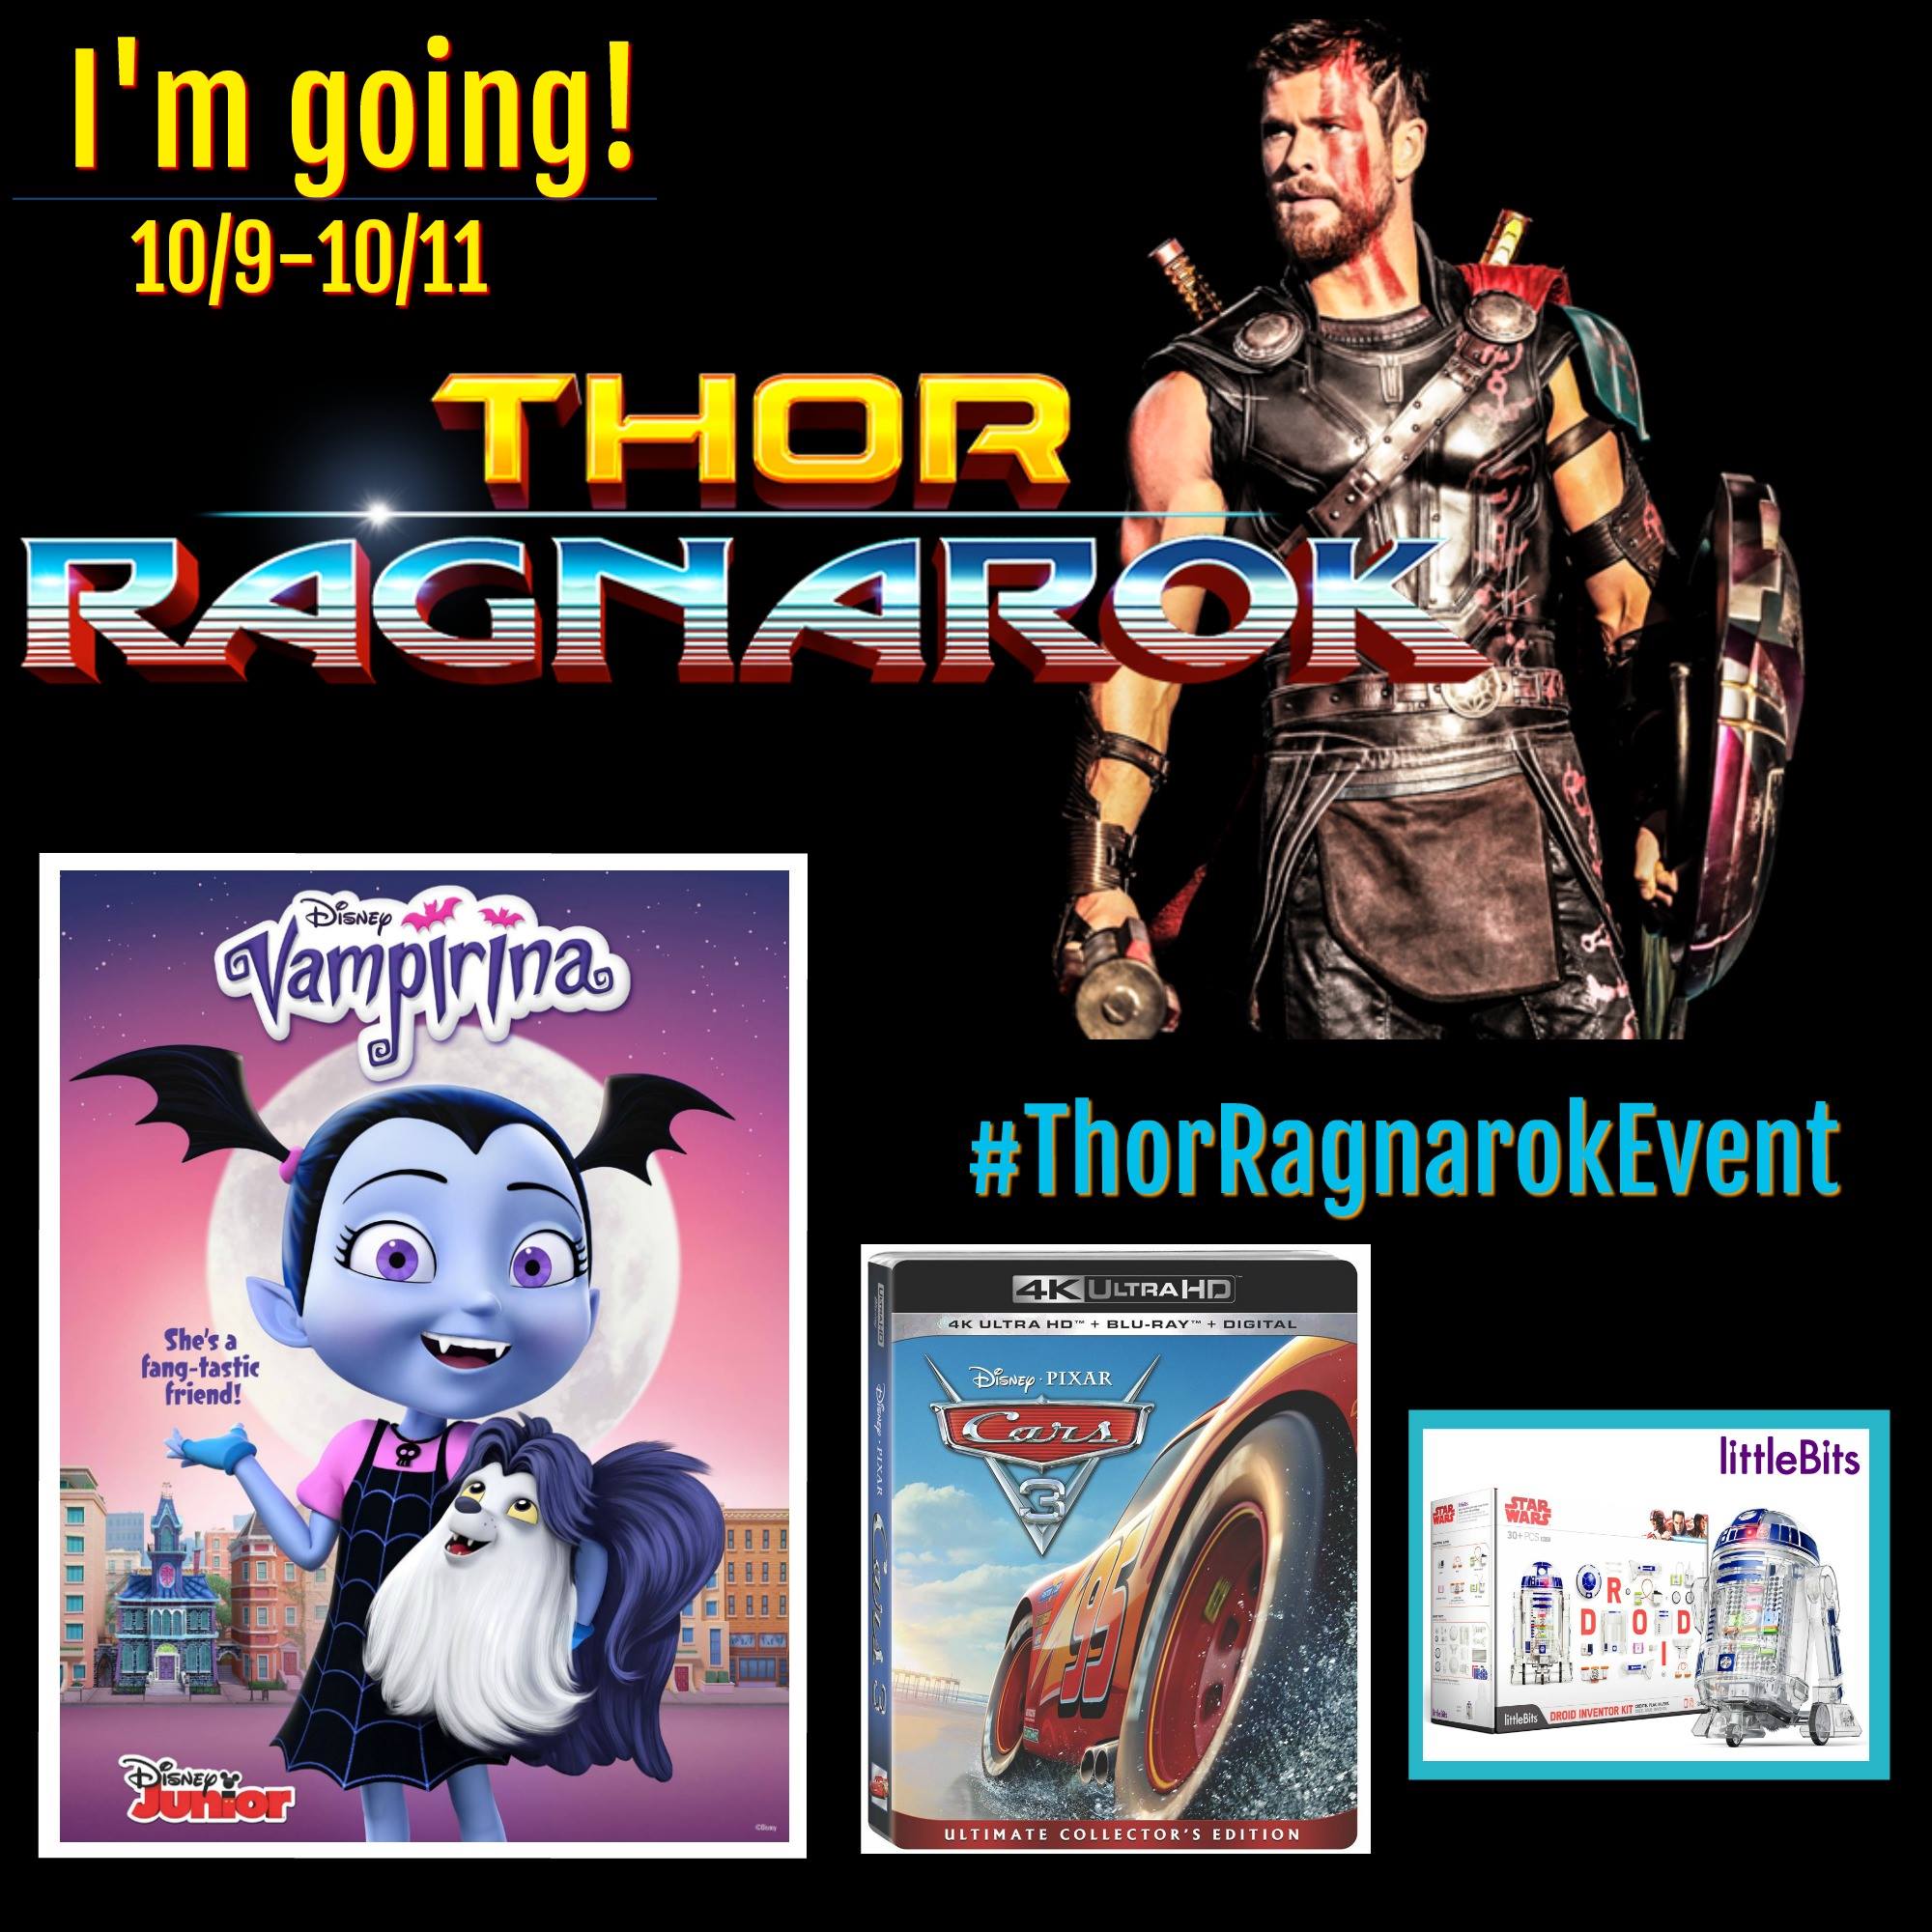 im-going-to-the-thor-ragnarok-movie-premiere-poster